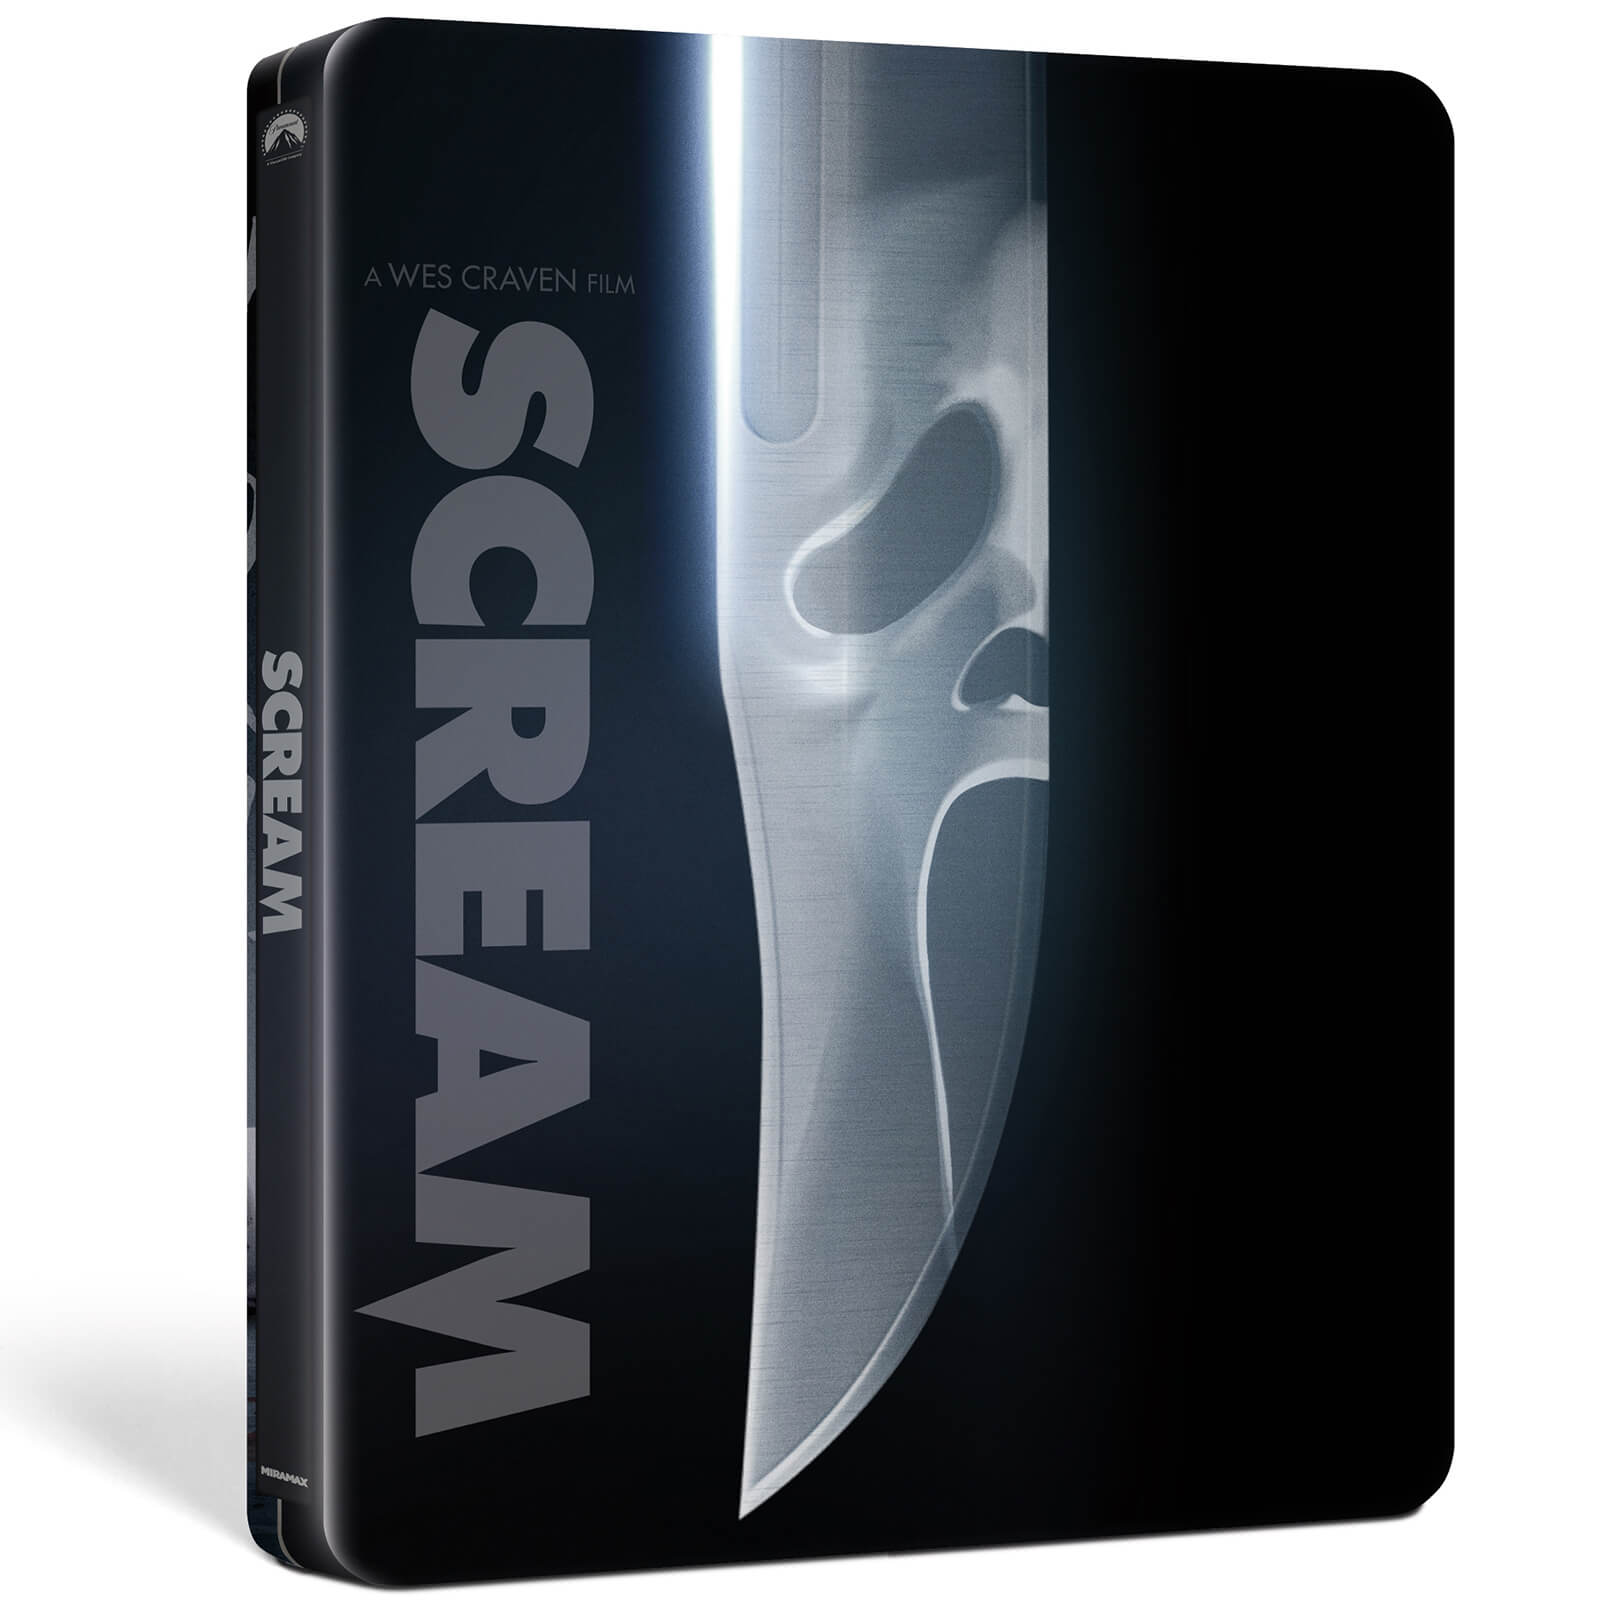 Scream - 4K Ultra HD Steelbook (Includes Blu-ray)